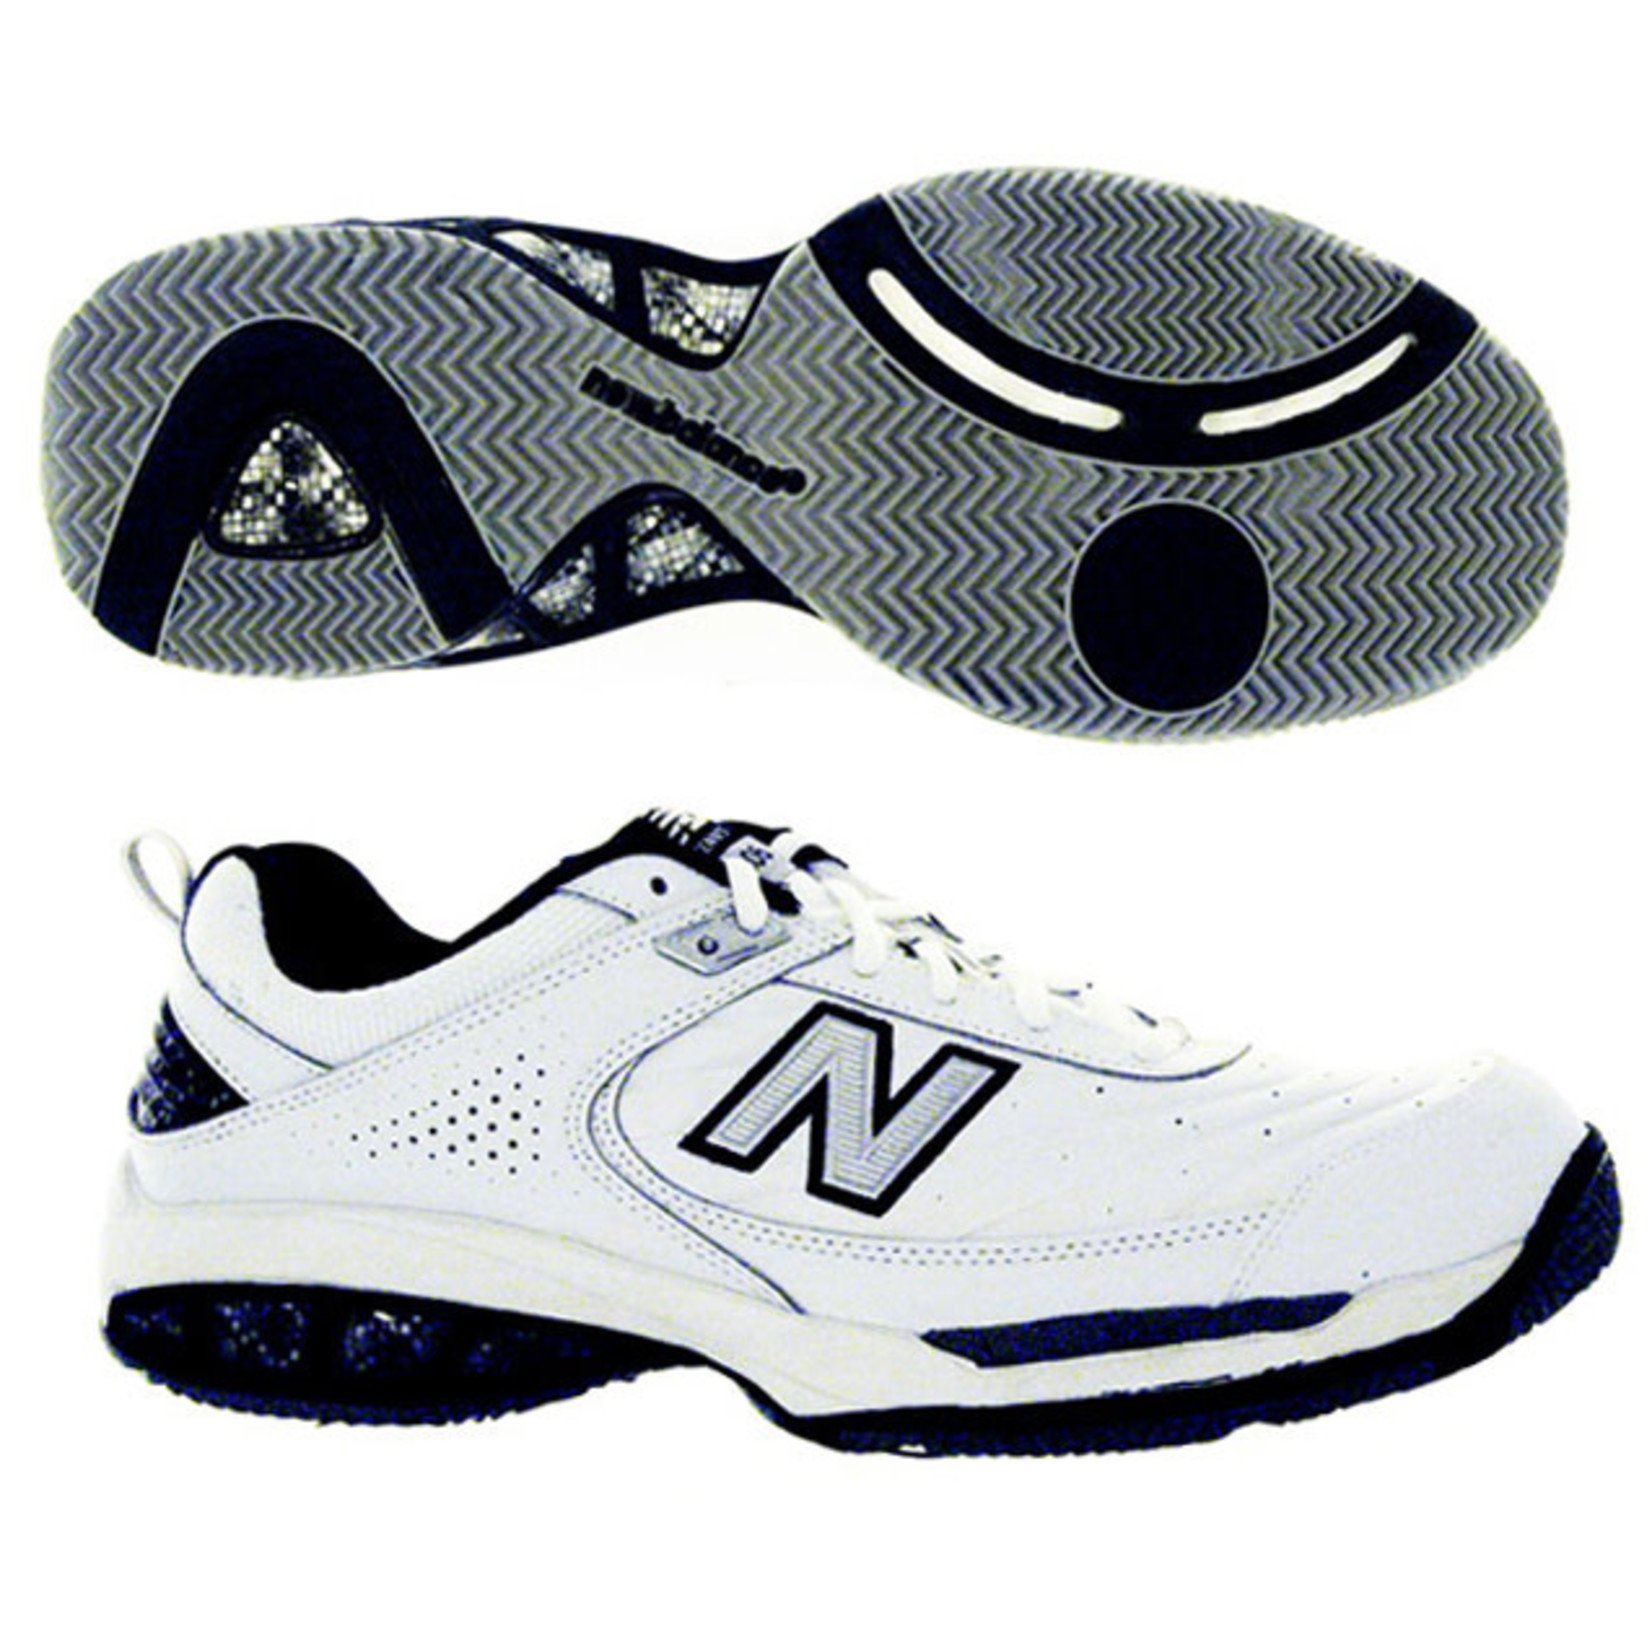 New Balance New Balance 806 Men's Tennis Shoes